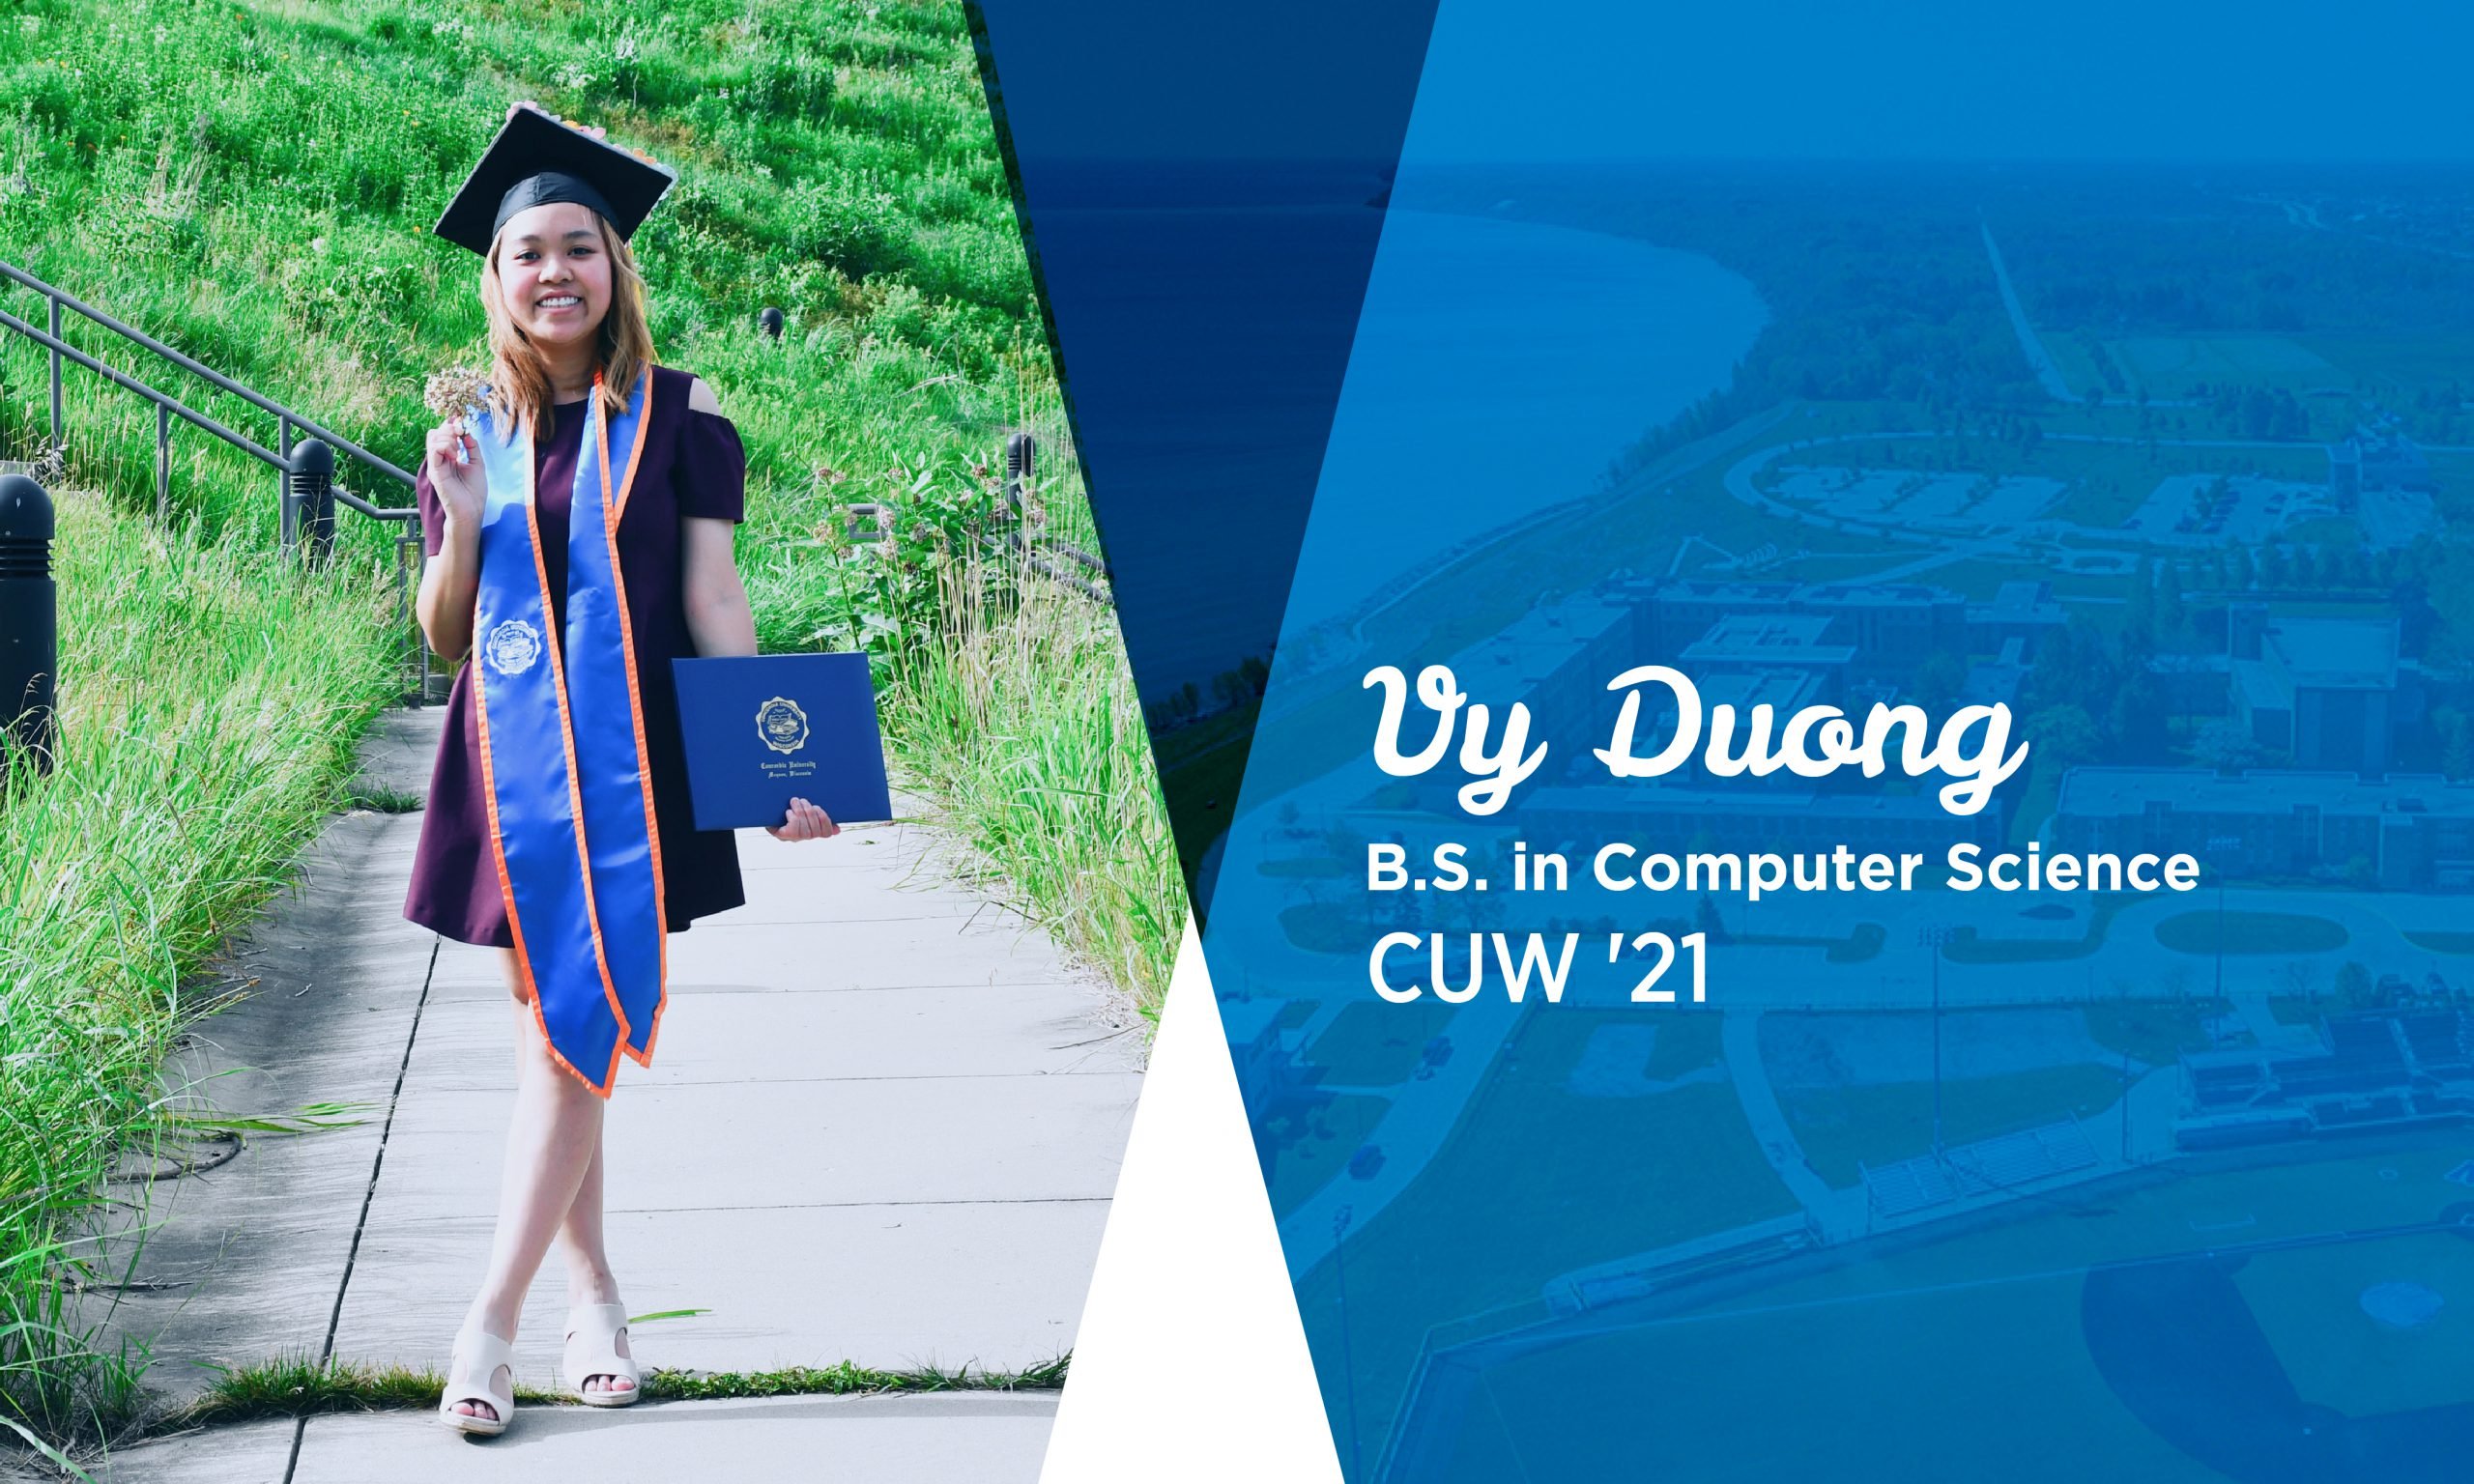 International alumni feature Vy Duong